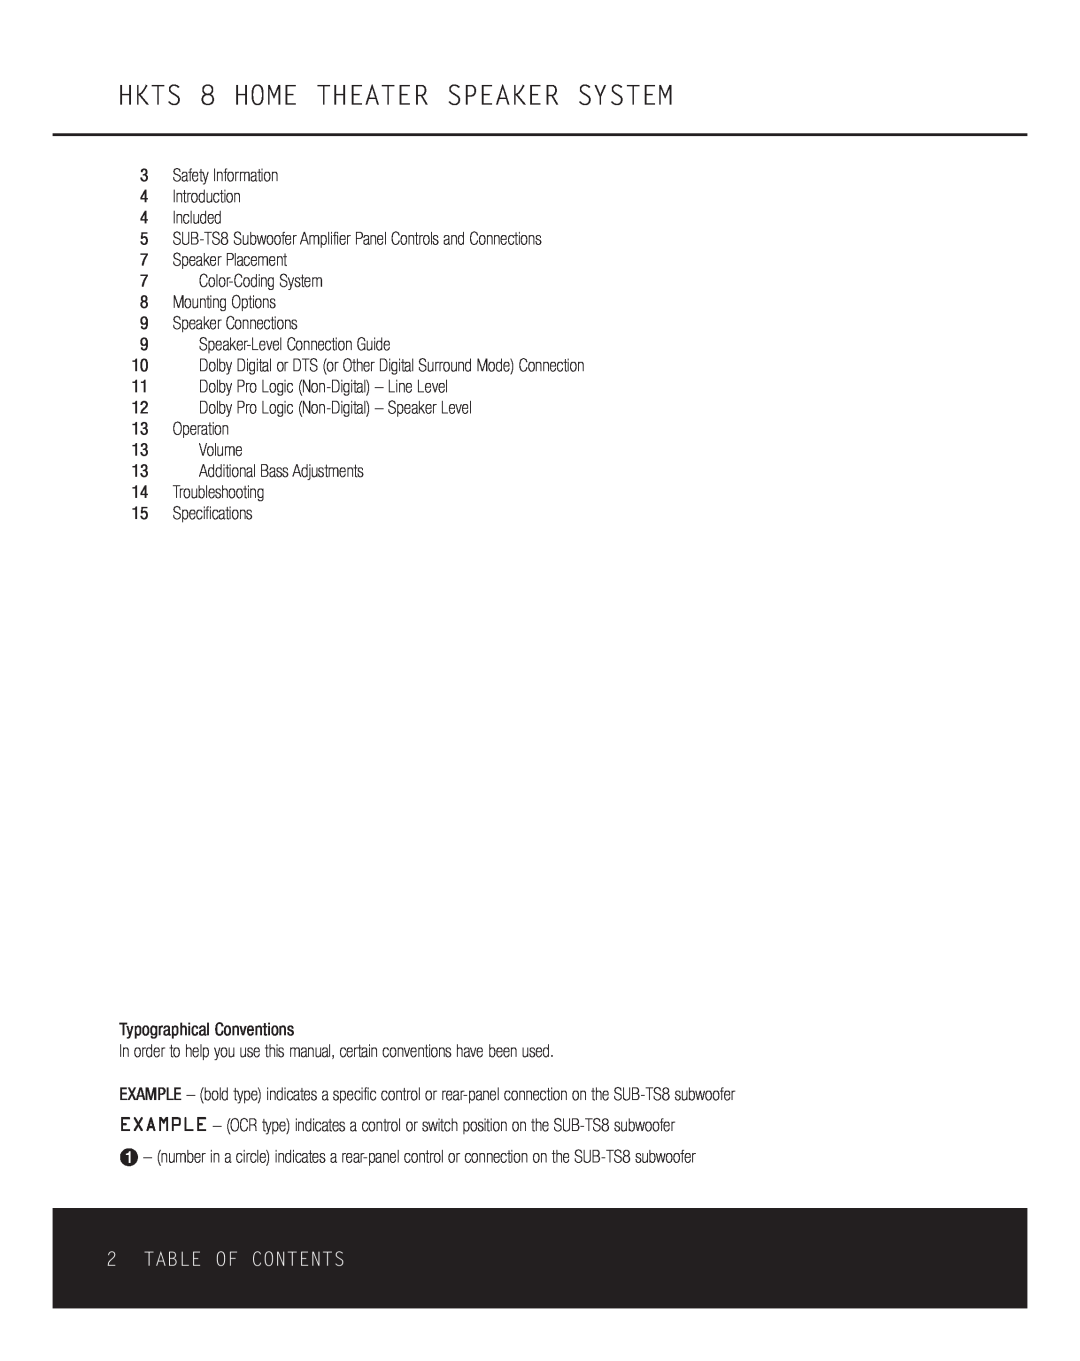 Harman-Kardon owner manual HKTS 8 HOME THEATER SPEAKER SYSTEM, Table Of Contents 